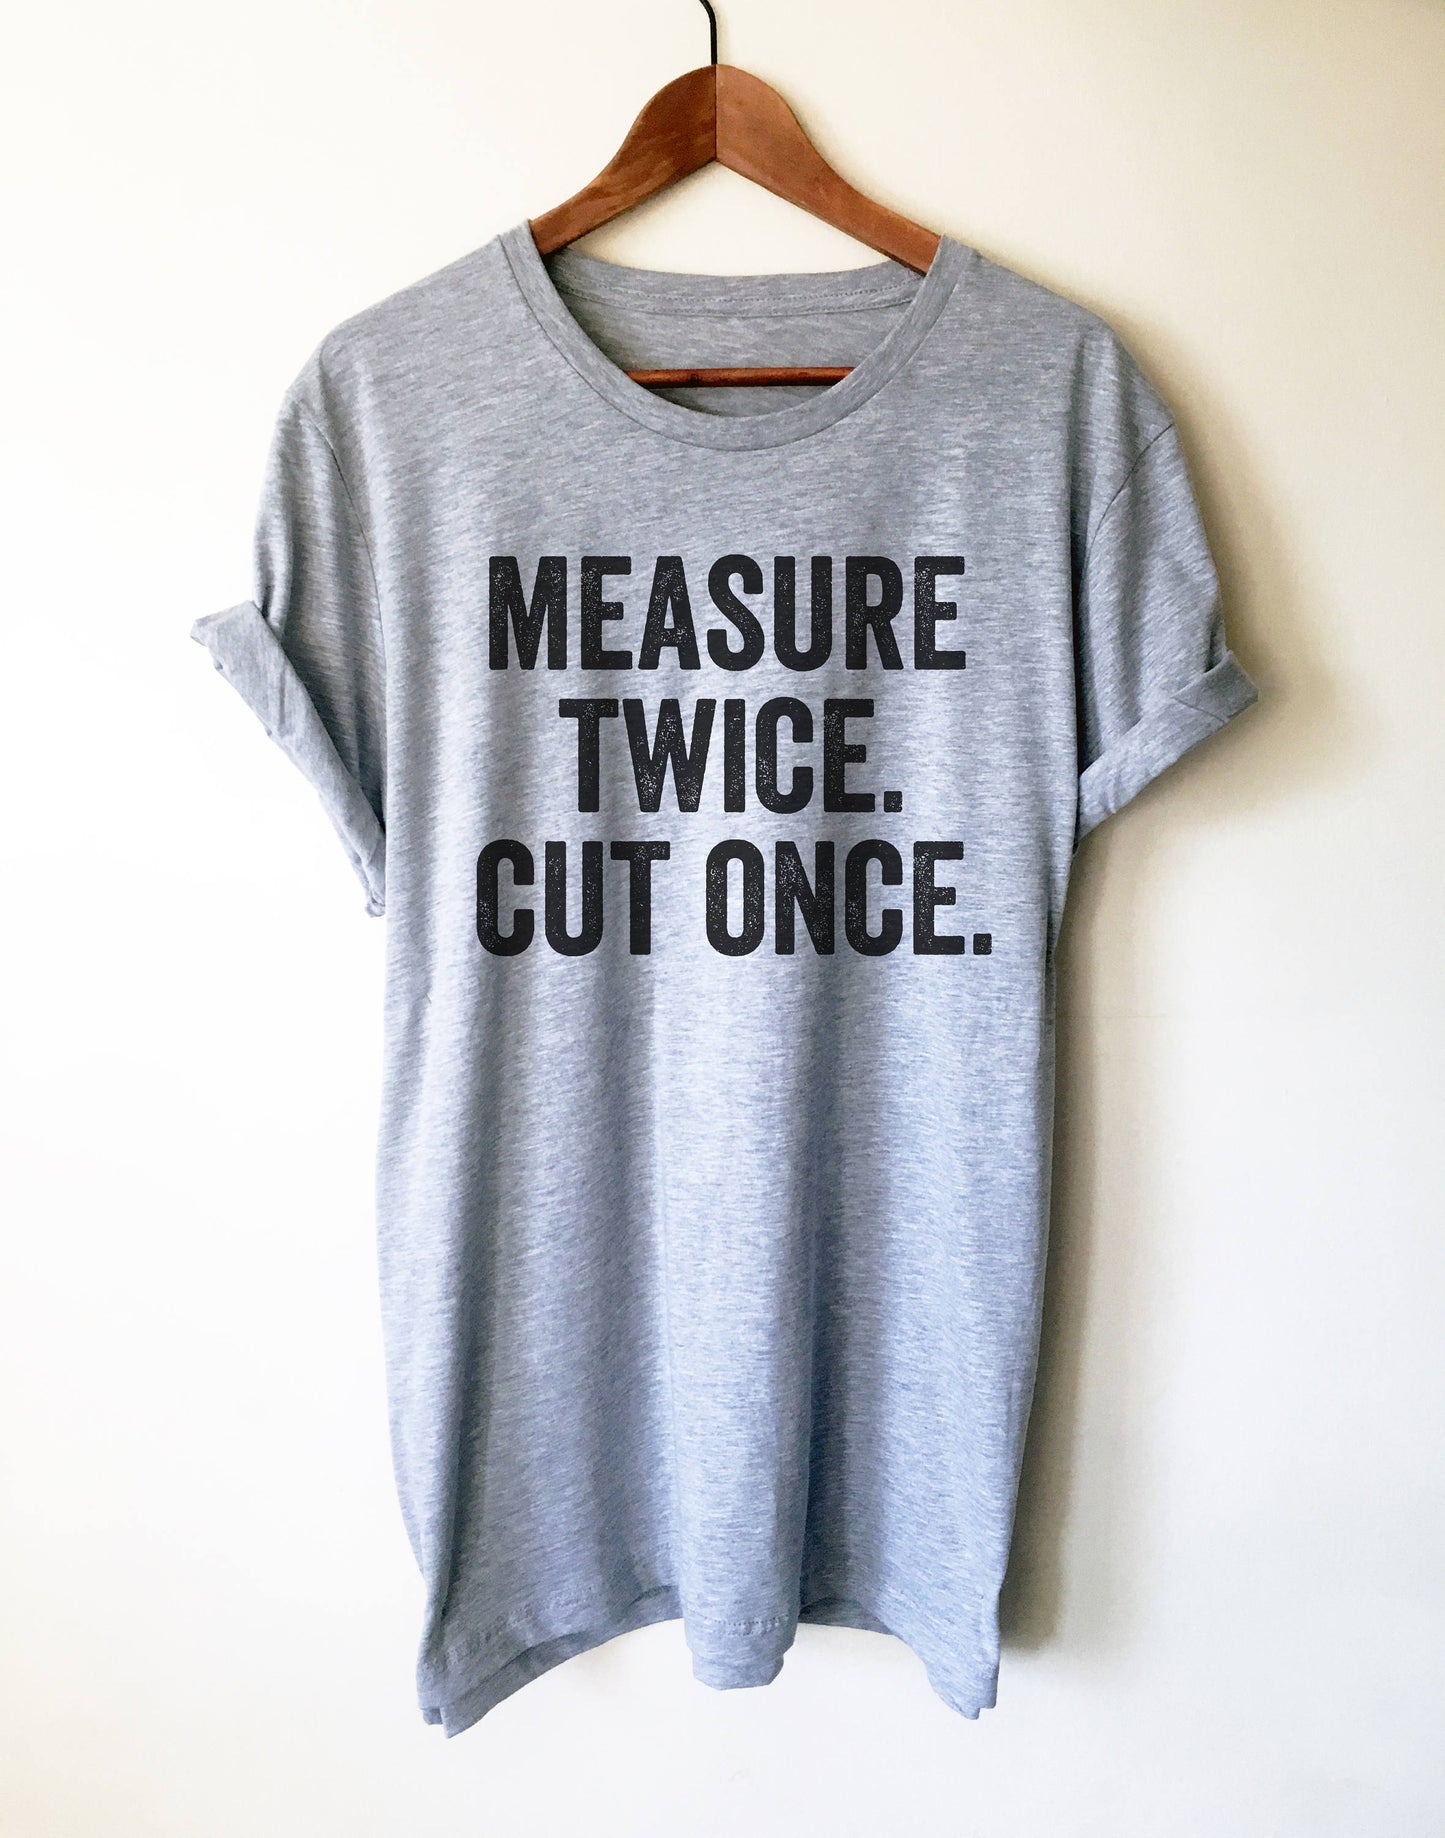 Measure Twice. Cut Once. Unisex Shirt - Carpenter shirt, Woodworker, Woodworking, Construction worker, Carpenter tshirt, Woodworking gift